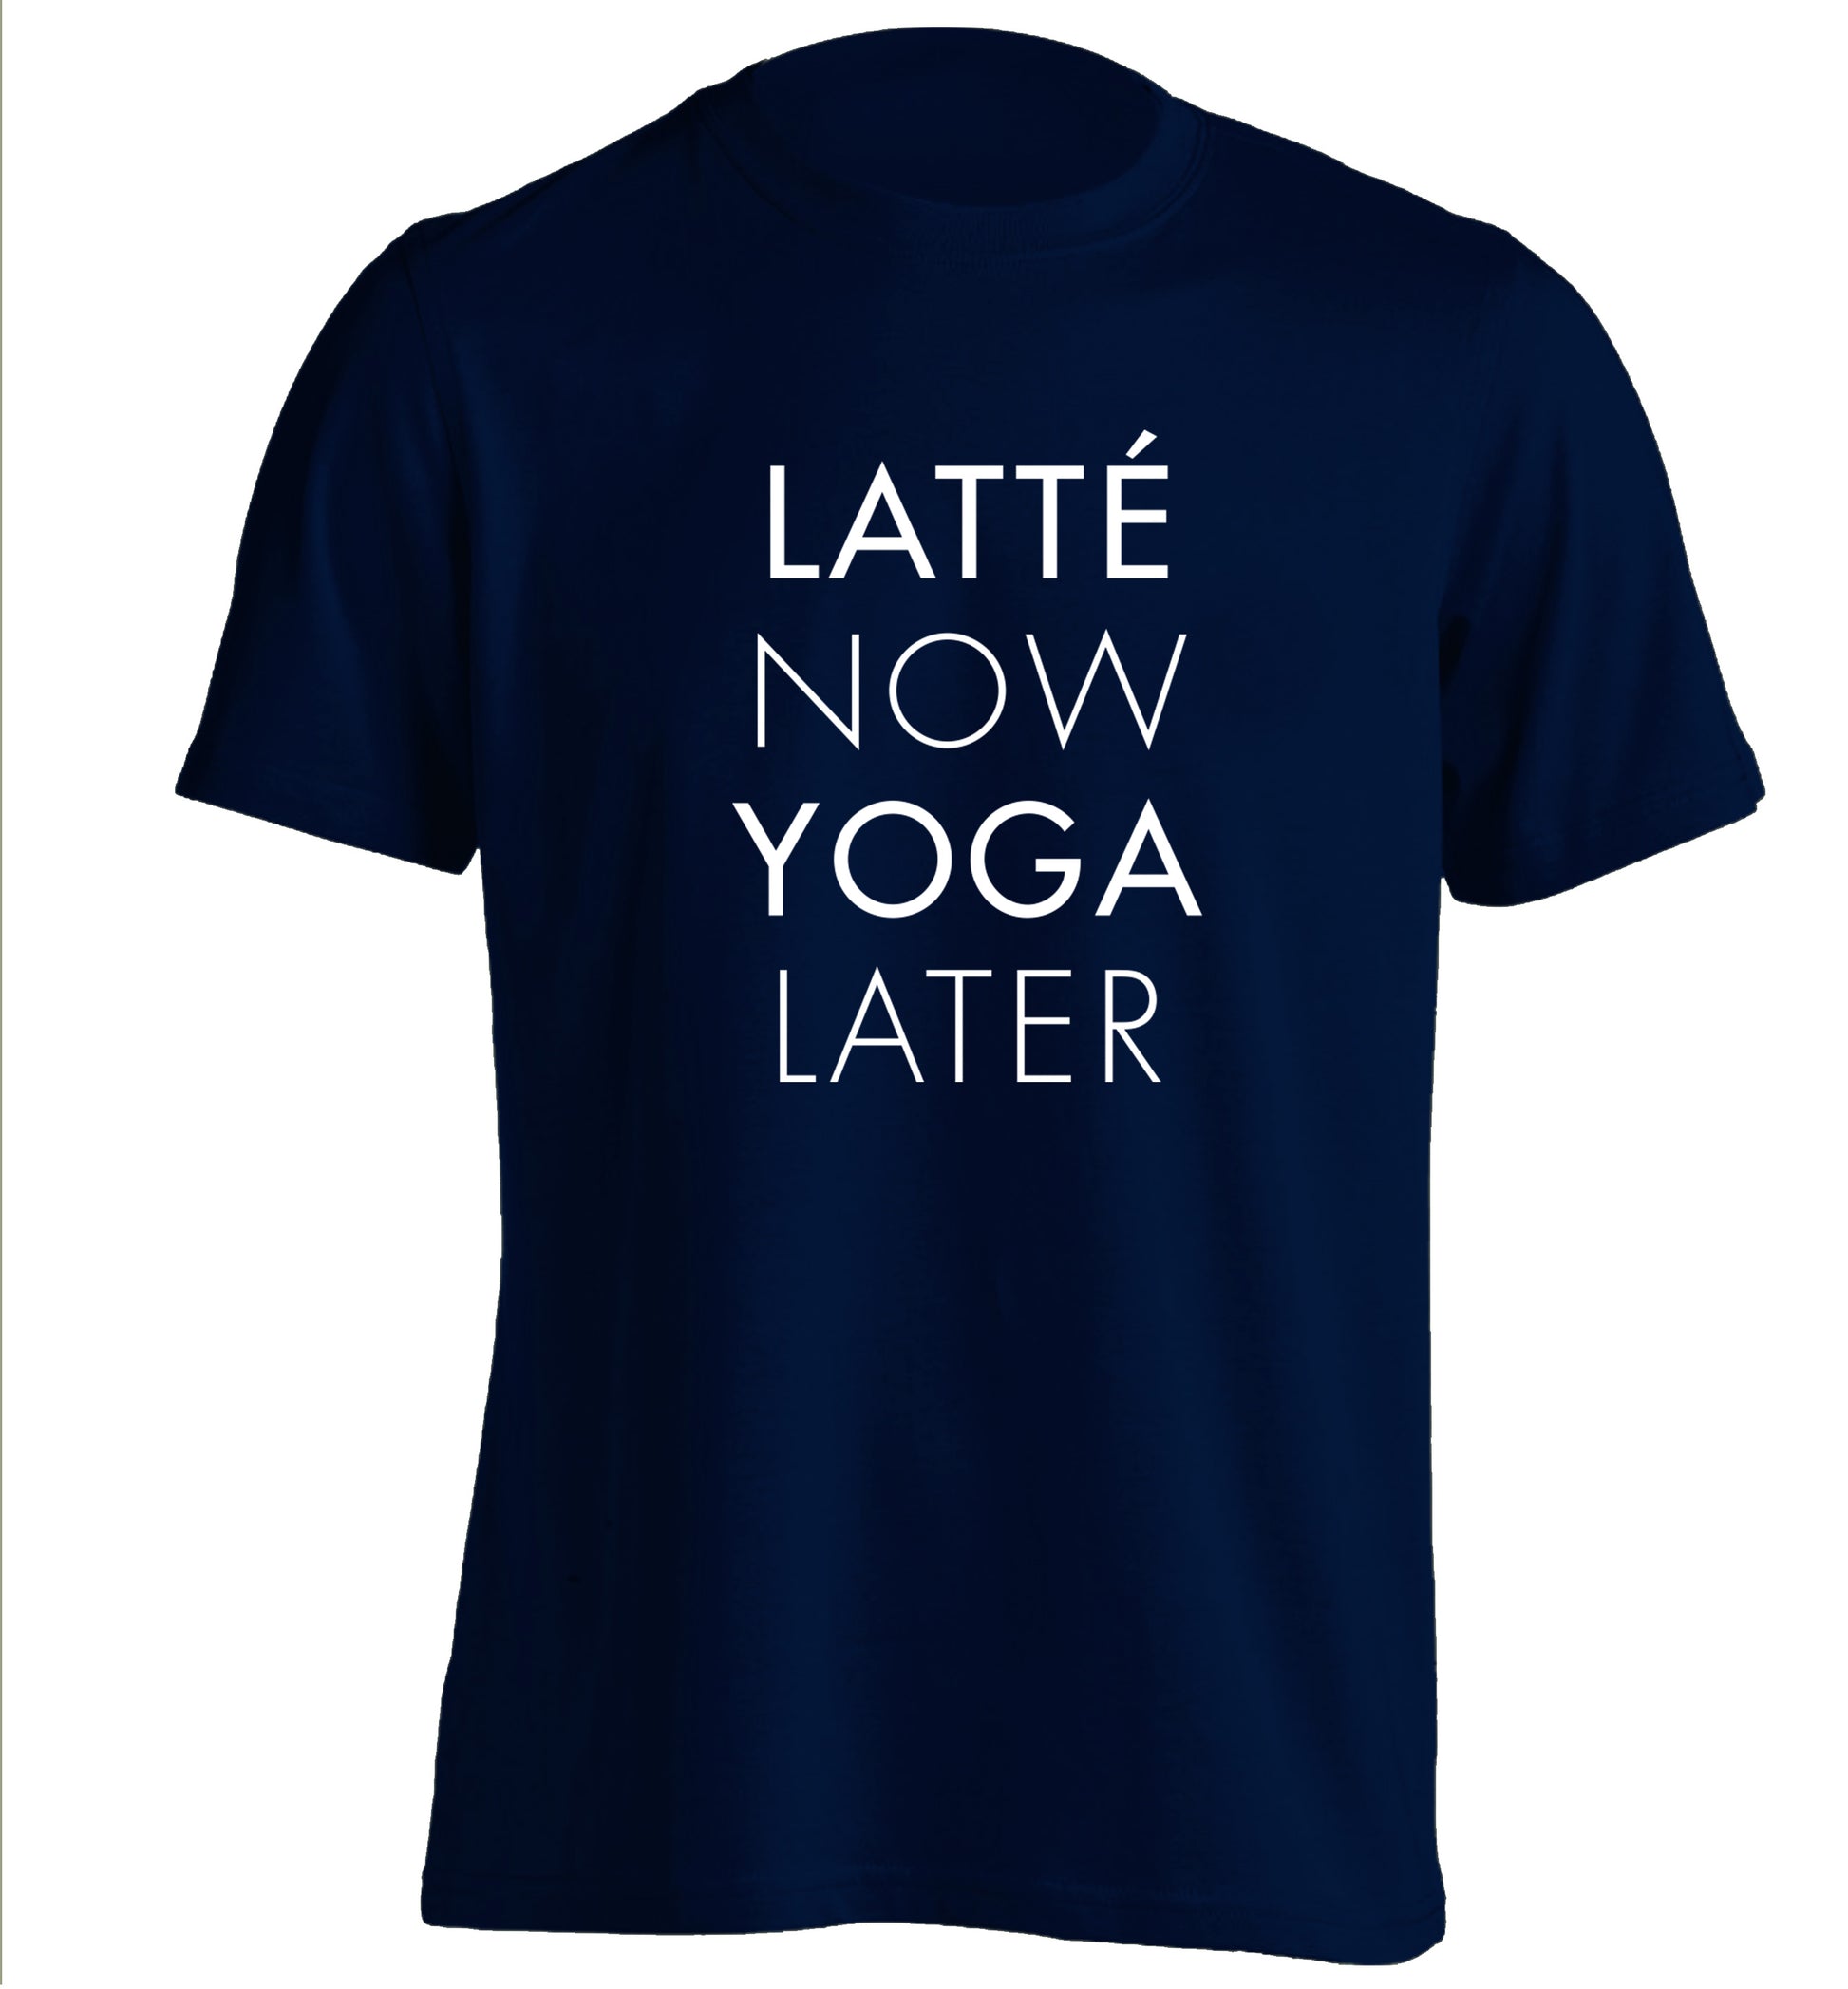 Latte now yoga later adults unisex navy Tshirt 2XL